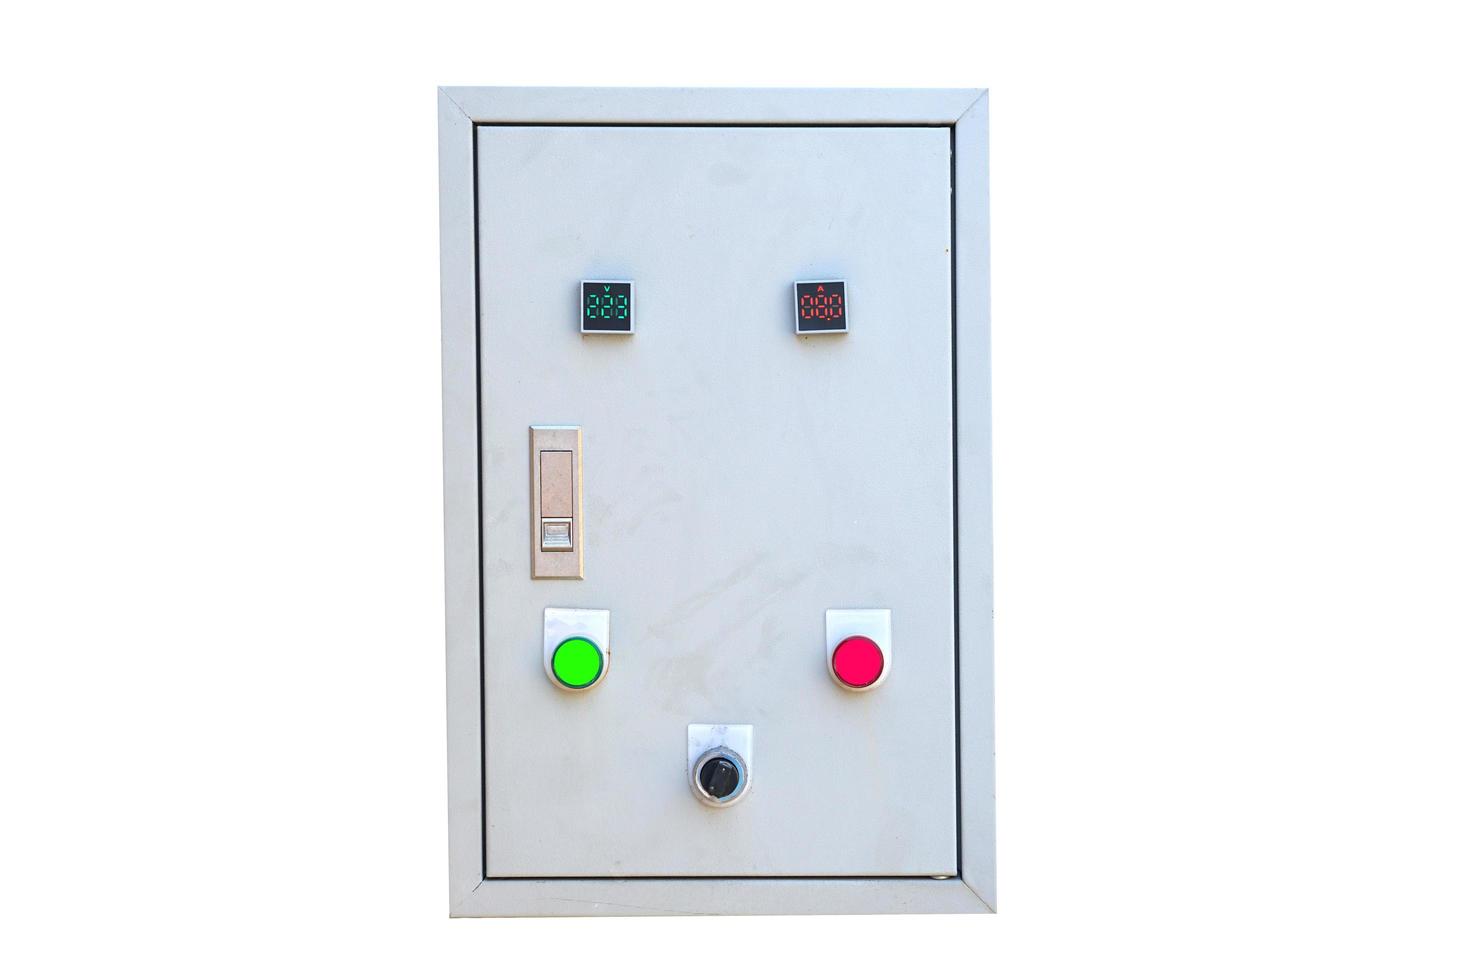 painel de controle elétrico no fundo branco foto